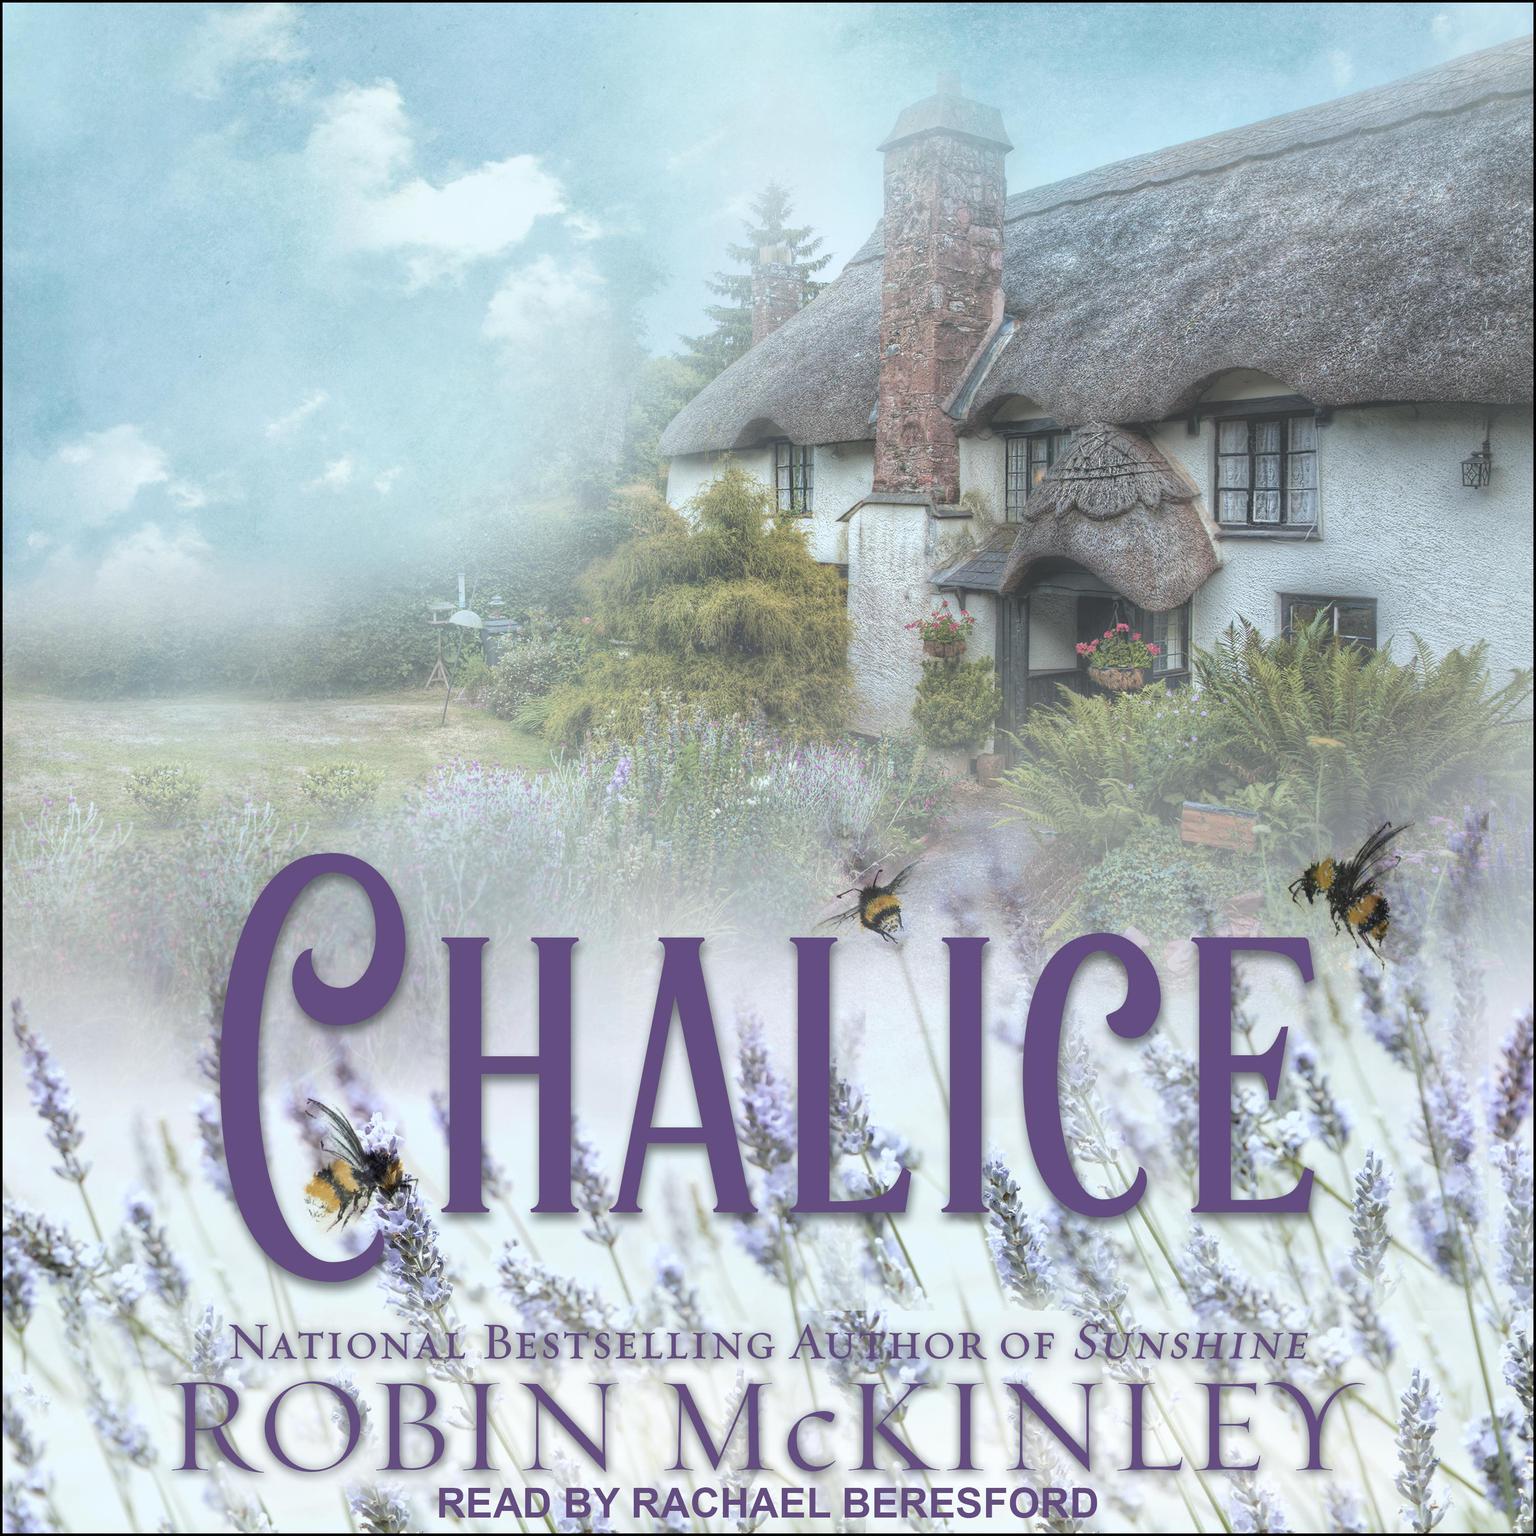 Robin McKinley: Chalice (2009, Ace Books)